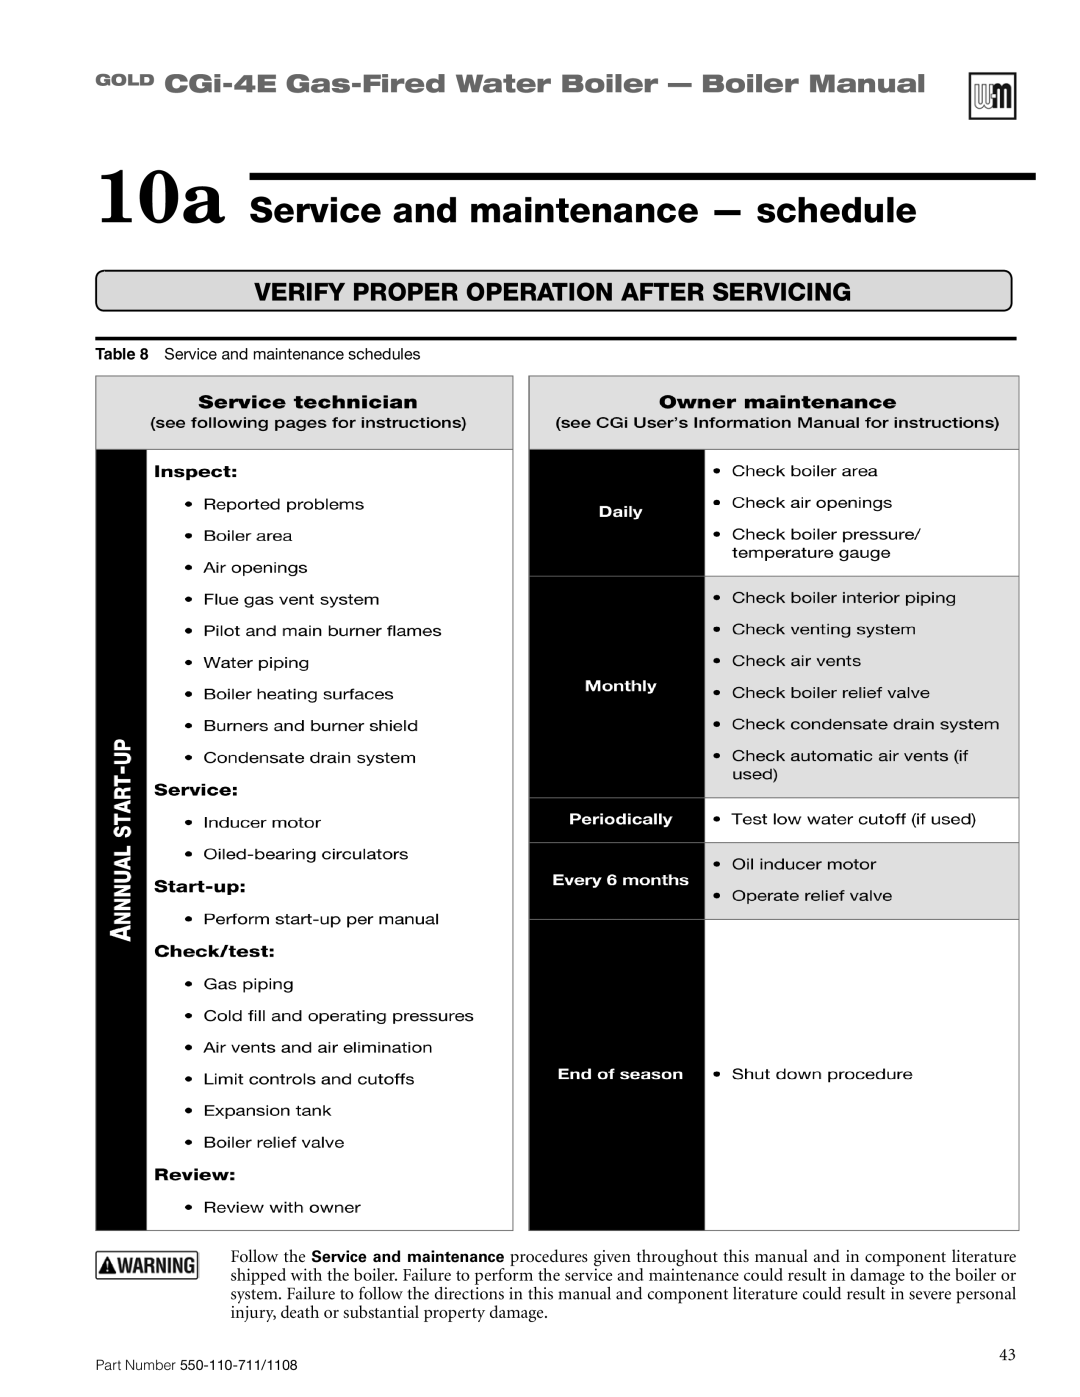 Weil-McLain CGI-4E manual 10a Service and maintenance - schedule, GOLD CGi-4E Gas-FiredWater Boiler - Boiler Manual 